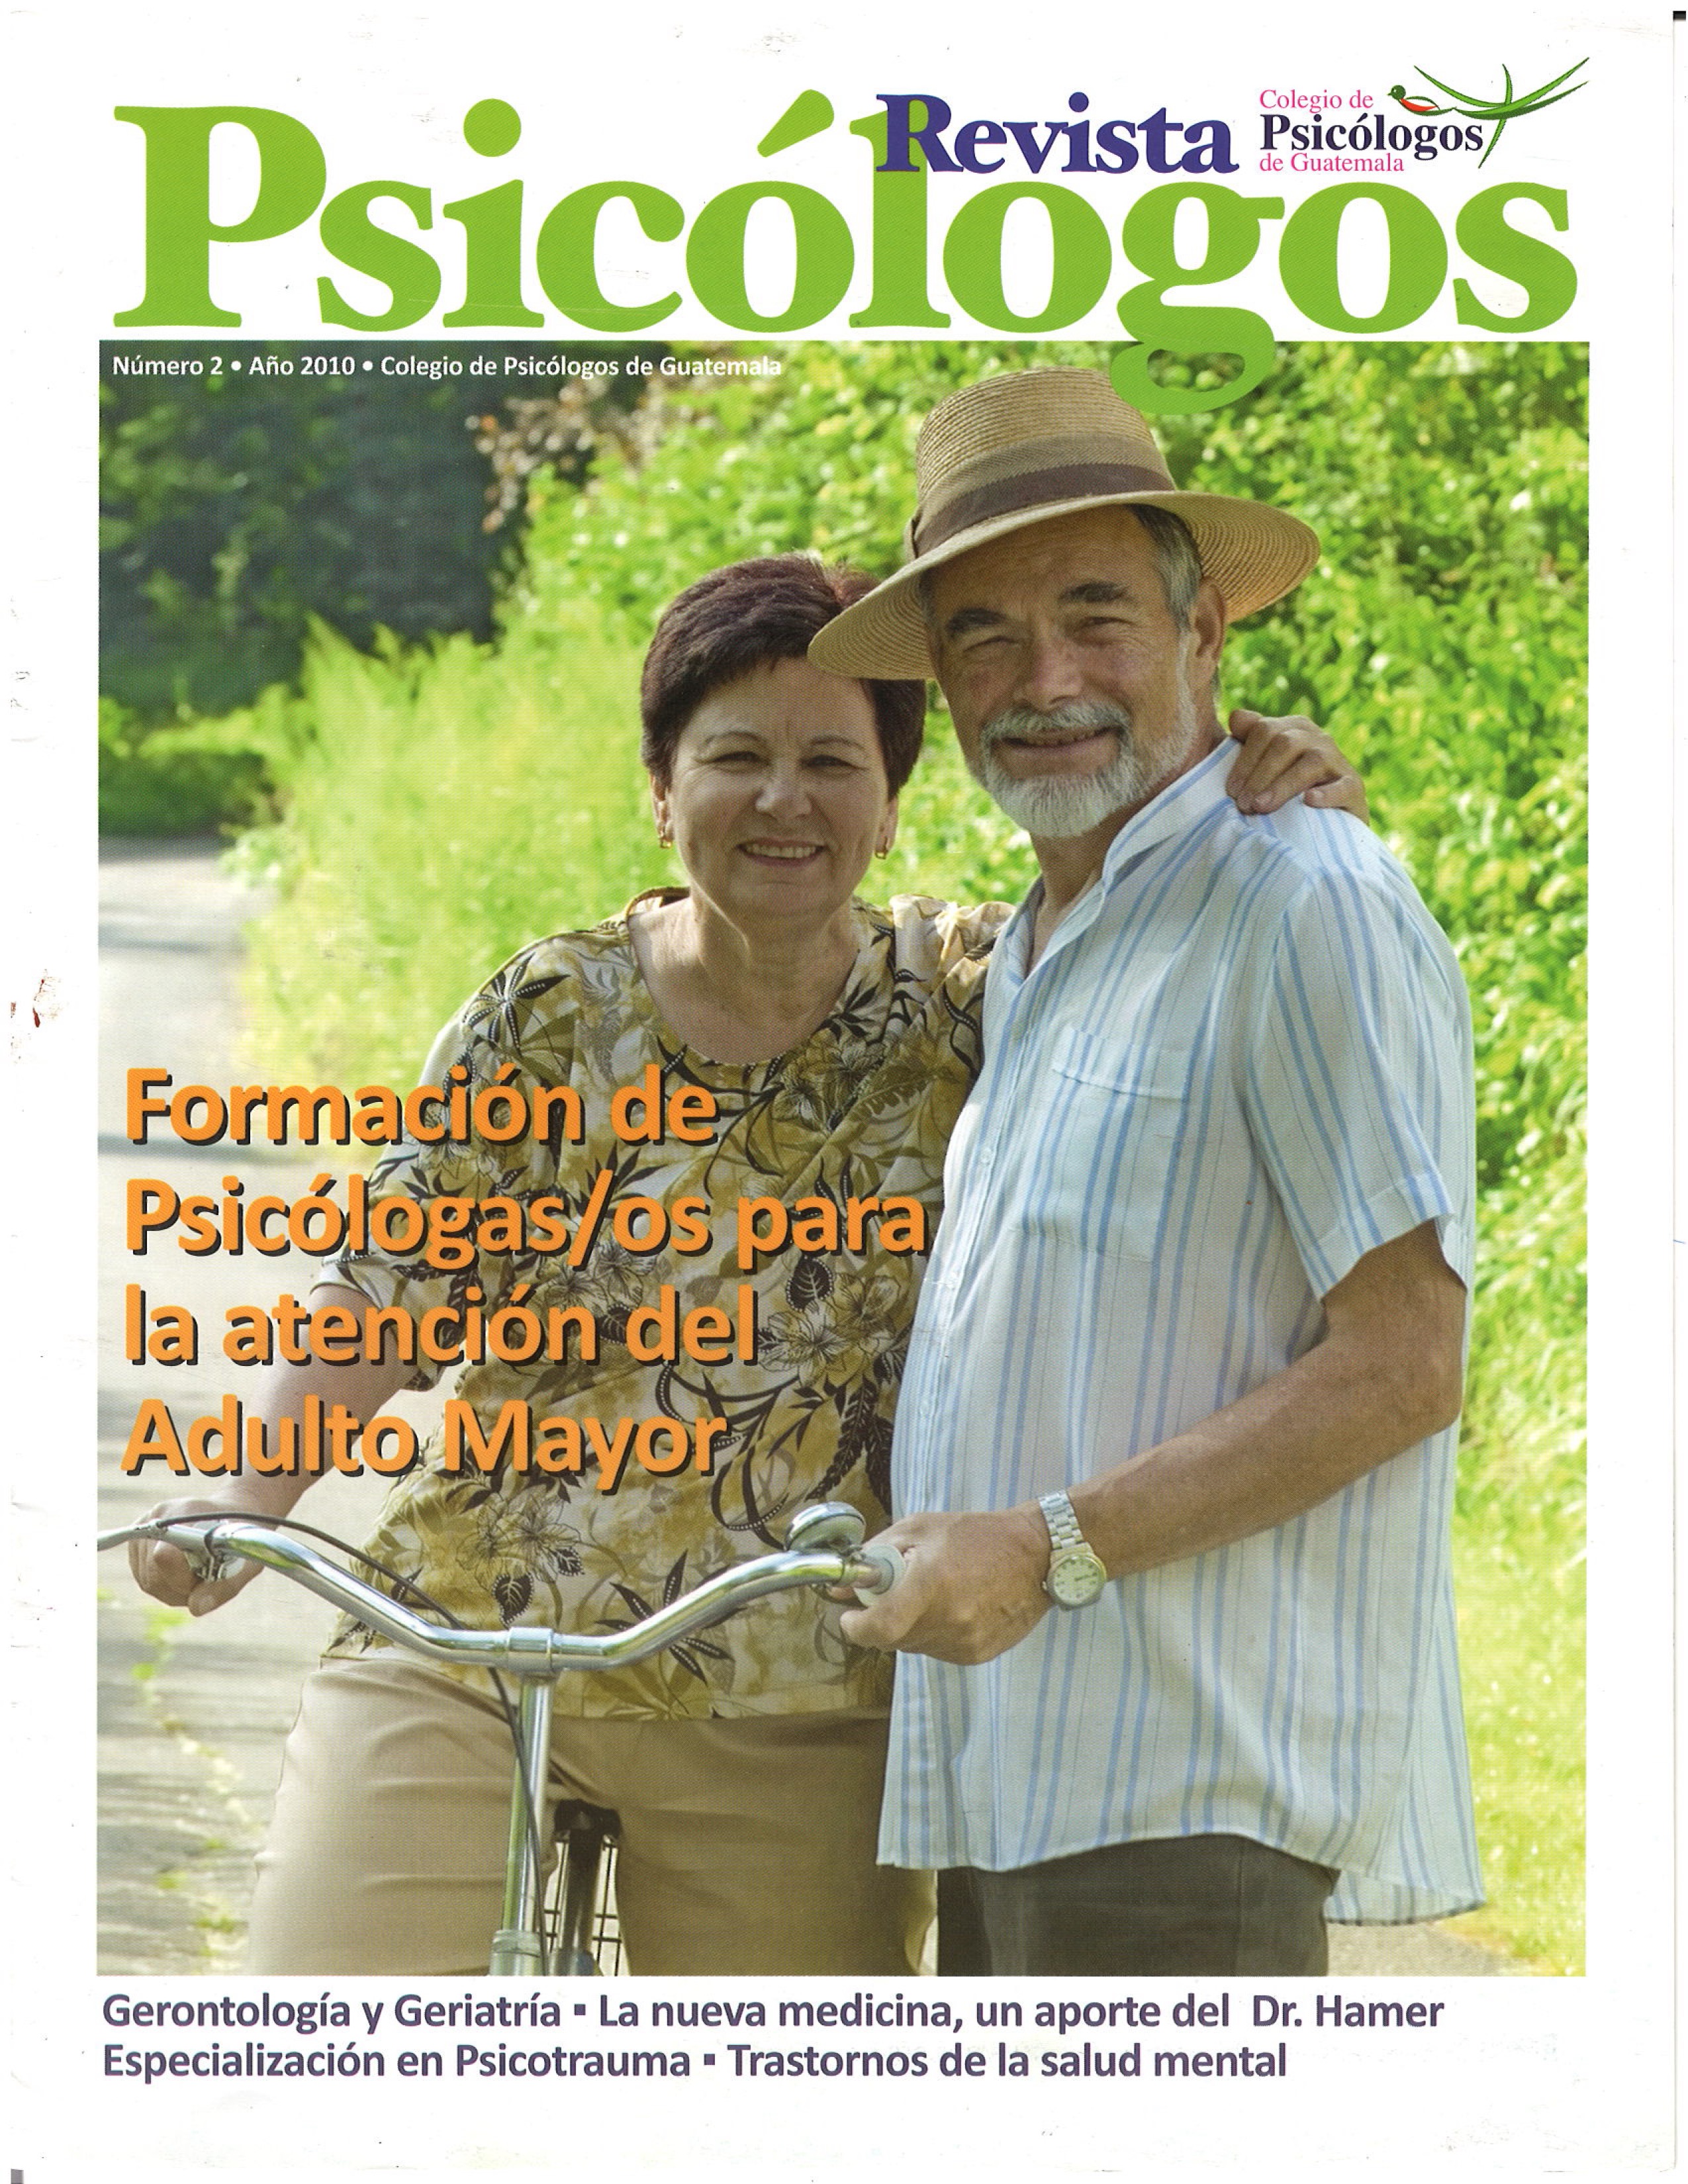 					Ver Vol. 1 Núm. 2 (2010): Revista Psicólogos No. 2
				